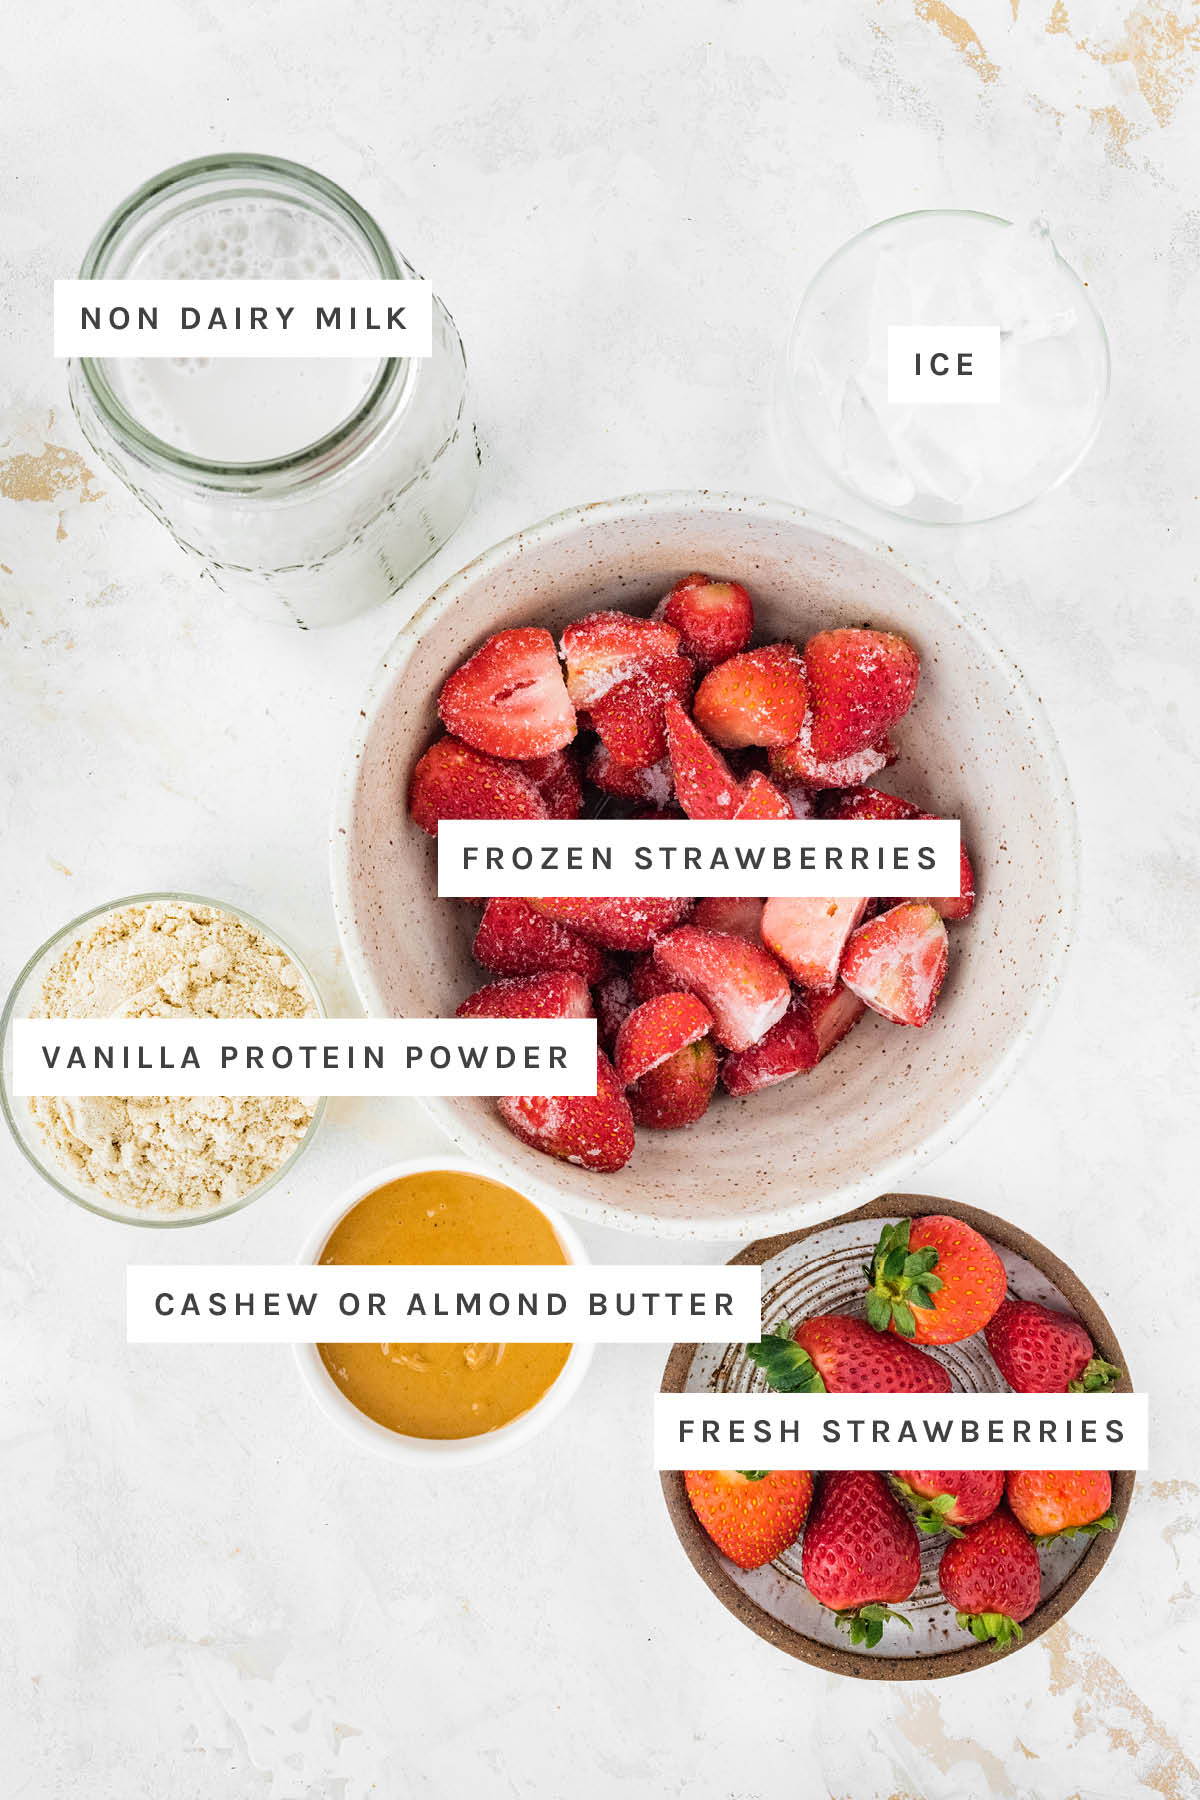 Ingredients measured out to make a Strawberry Protein Shake: non dairy milk, ice, frozen strawberries, vanilla protein powder, cashew or almond butter, fresh strawberries.